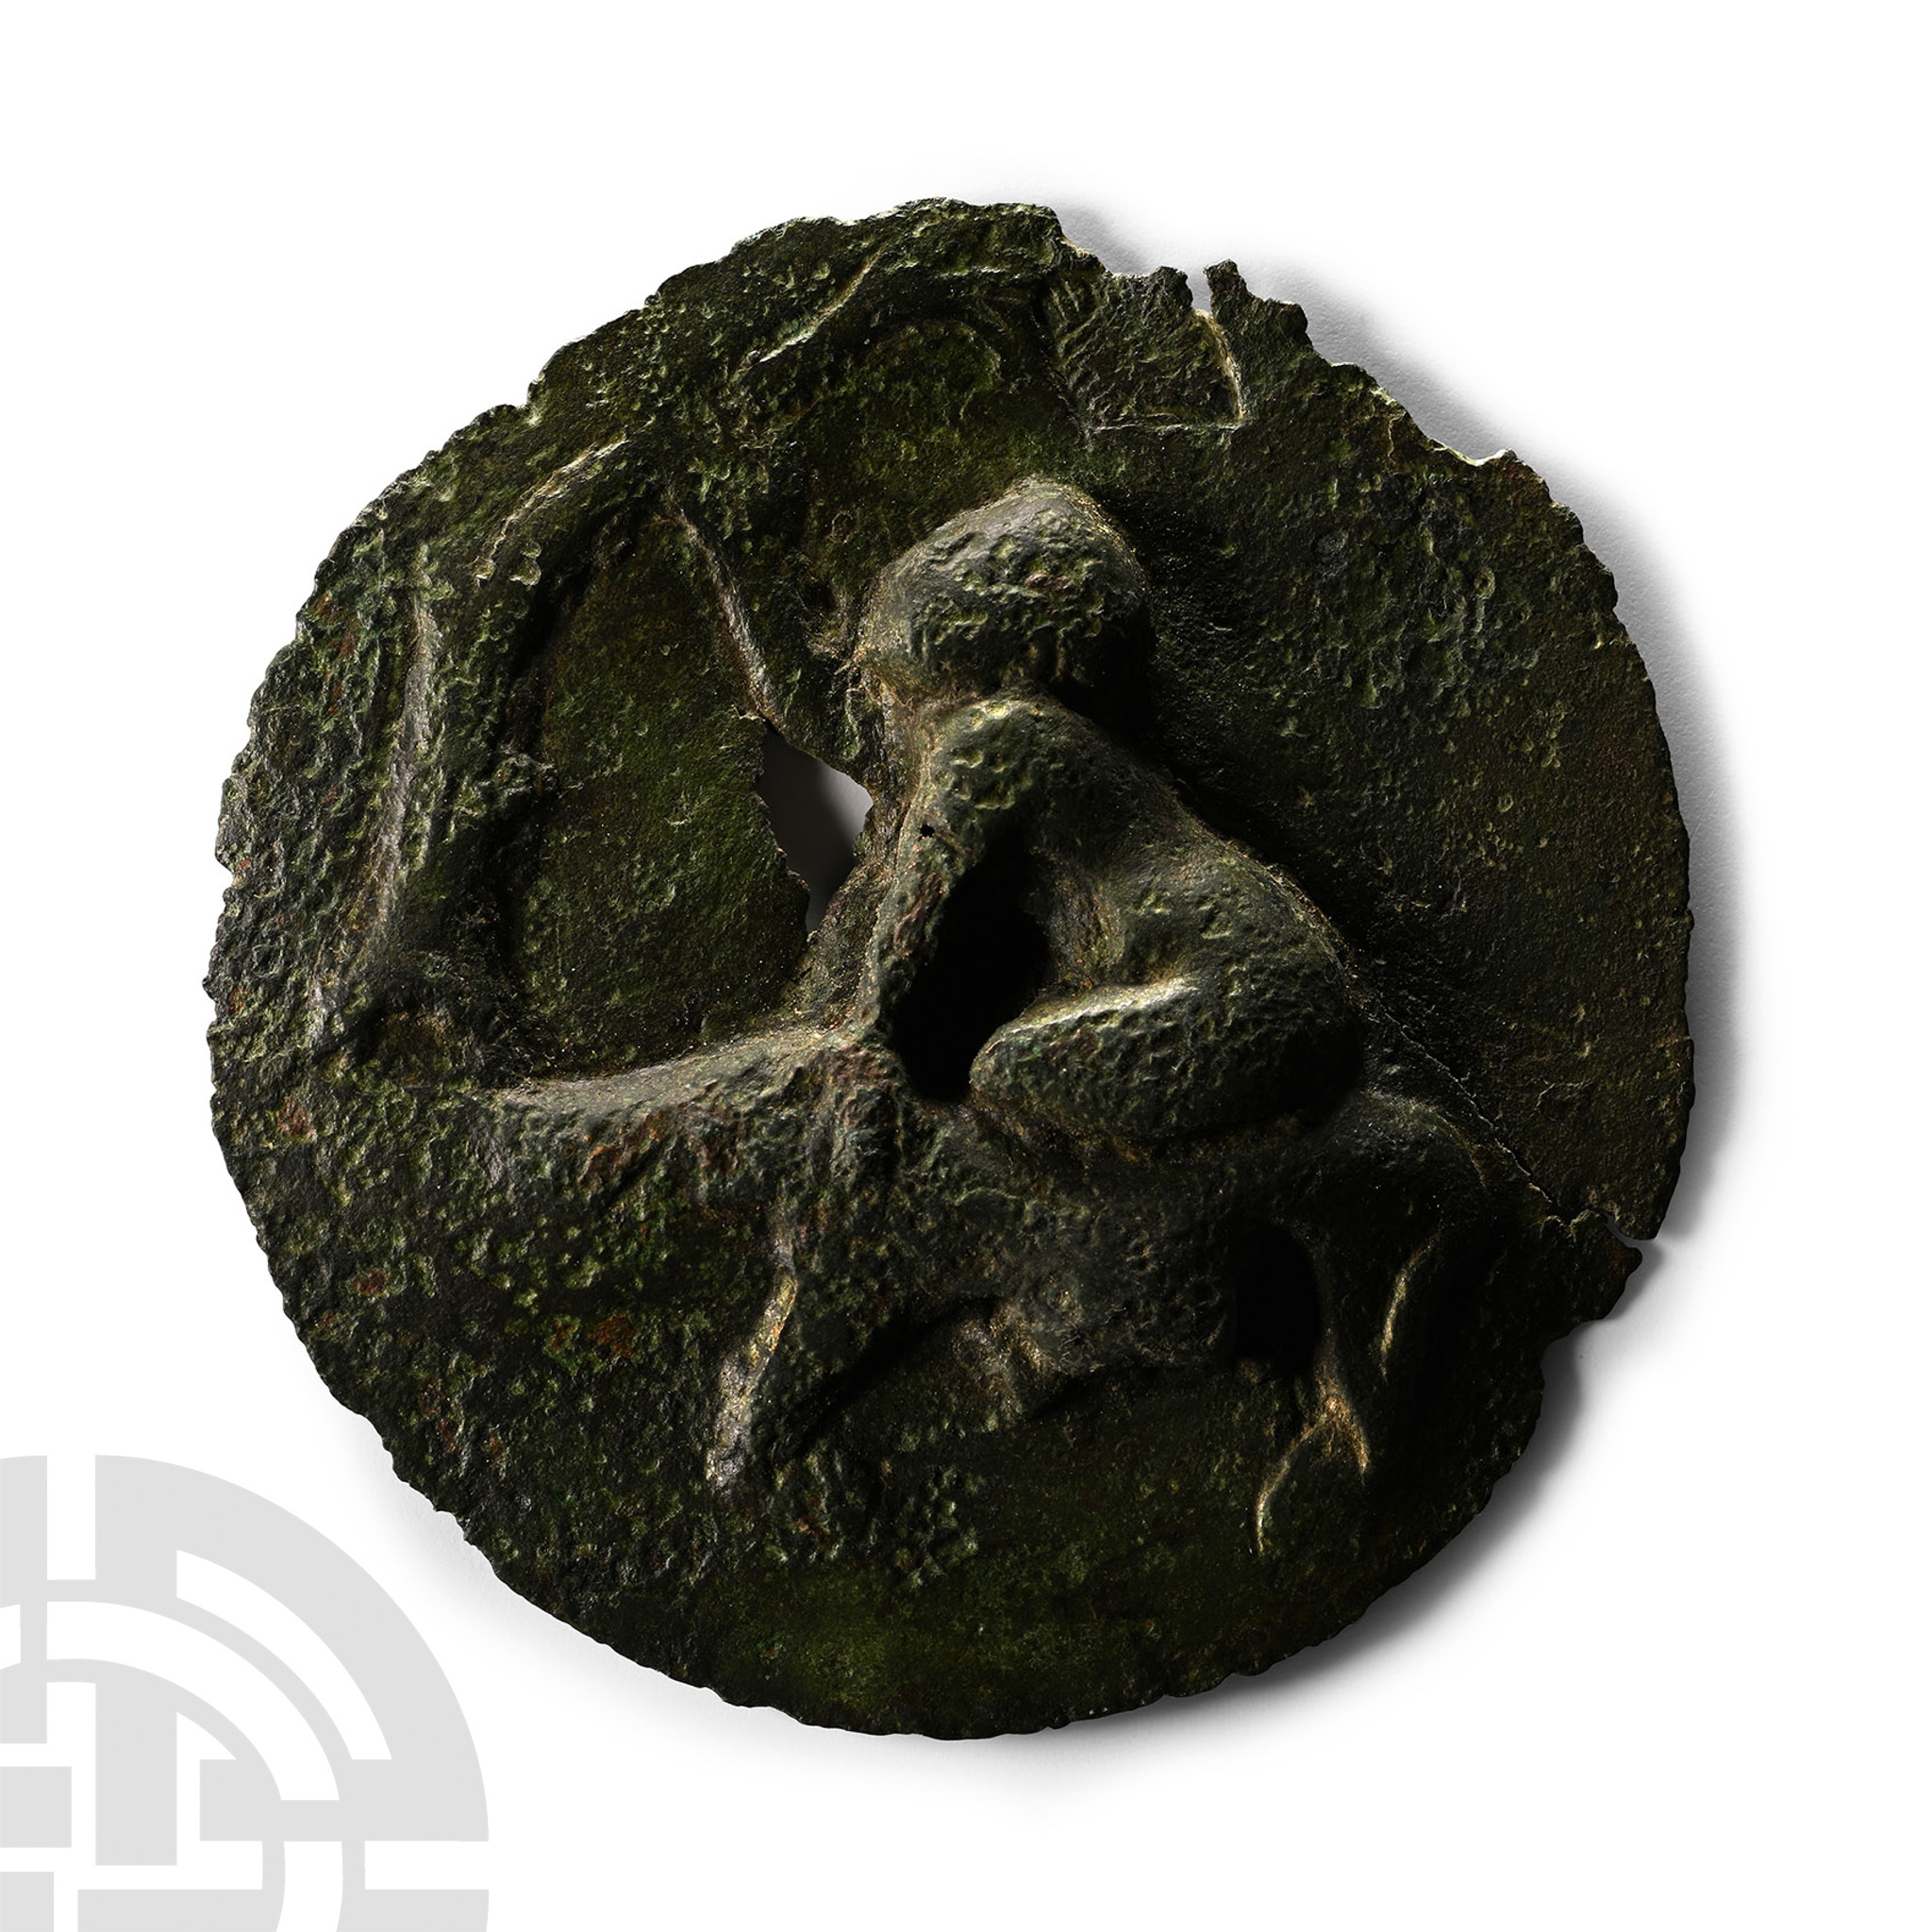 Roman 'The Wakefield' Bronze Founding of Rome Commemorative Military Phalera